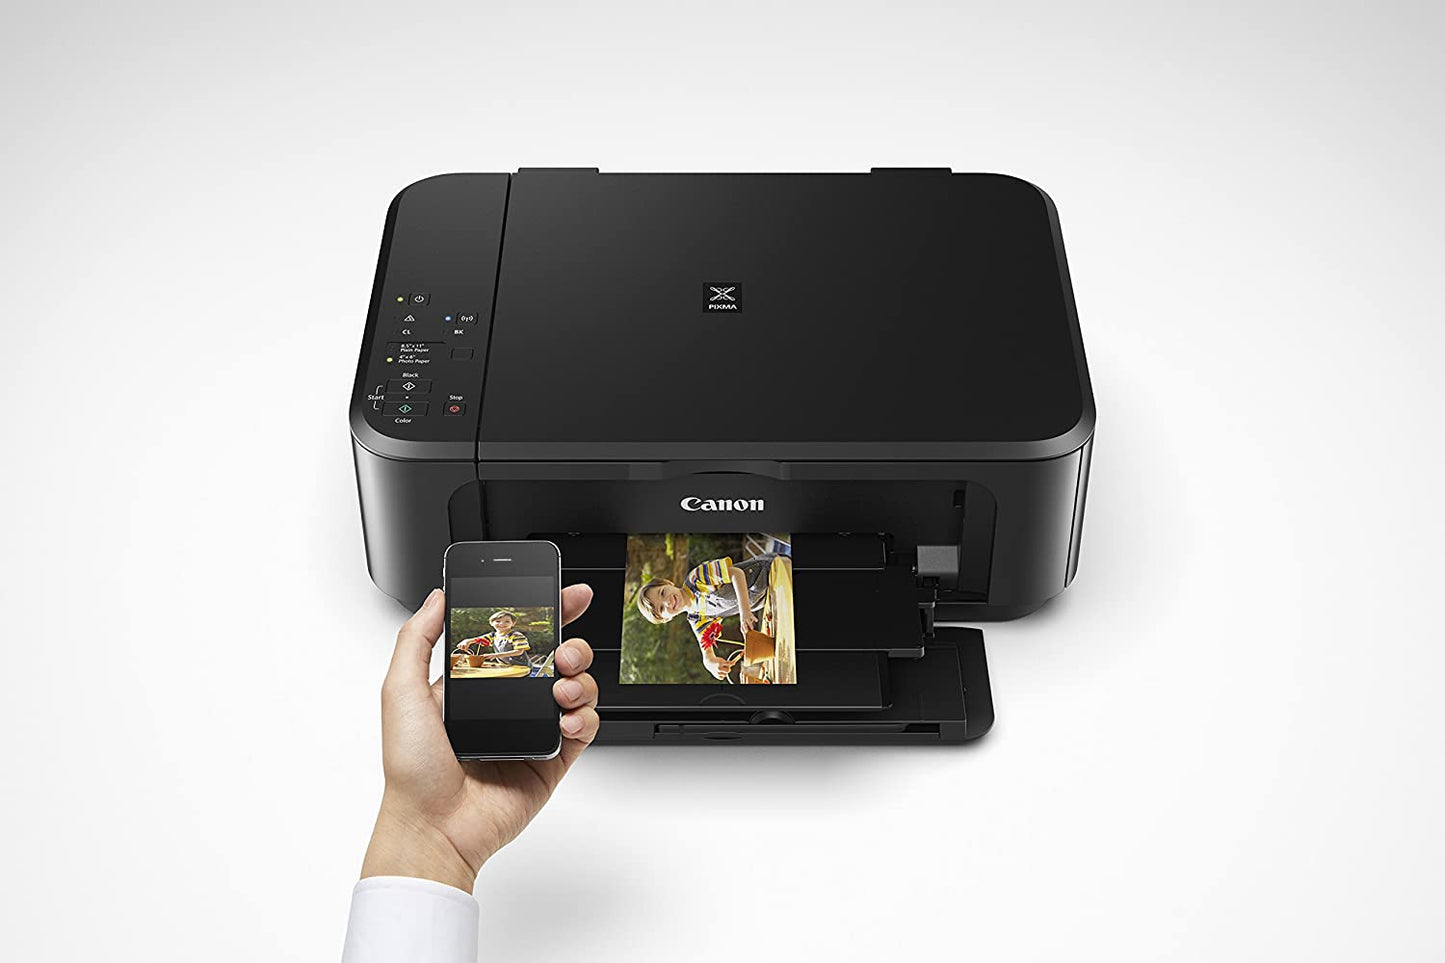 Canon Pixma Mg3620 Wireless All-In-One Inkjet Printer